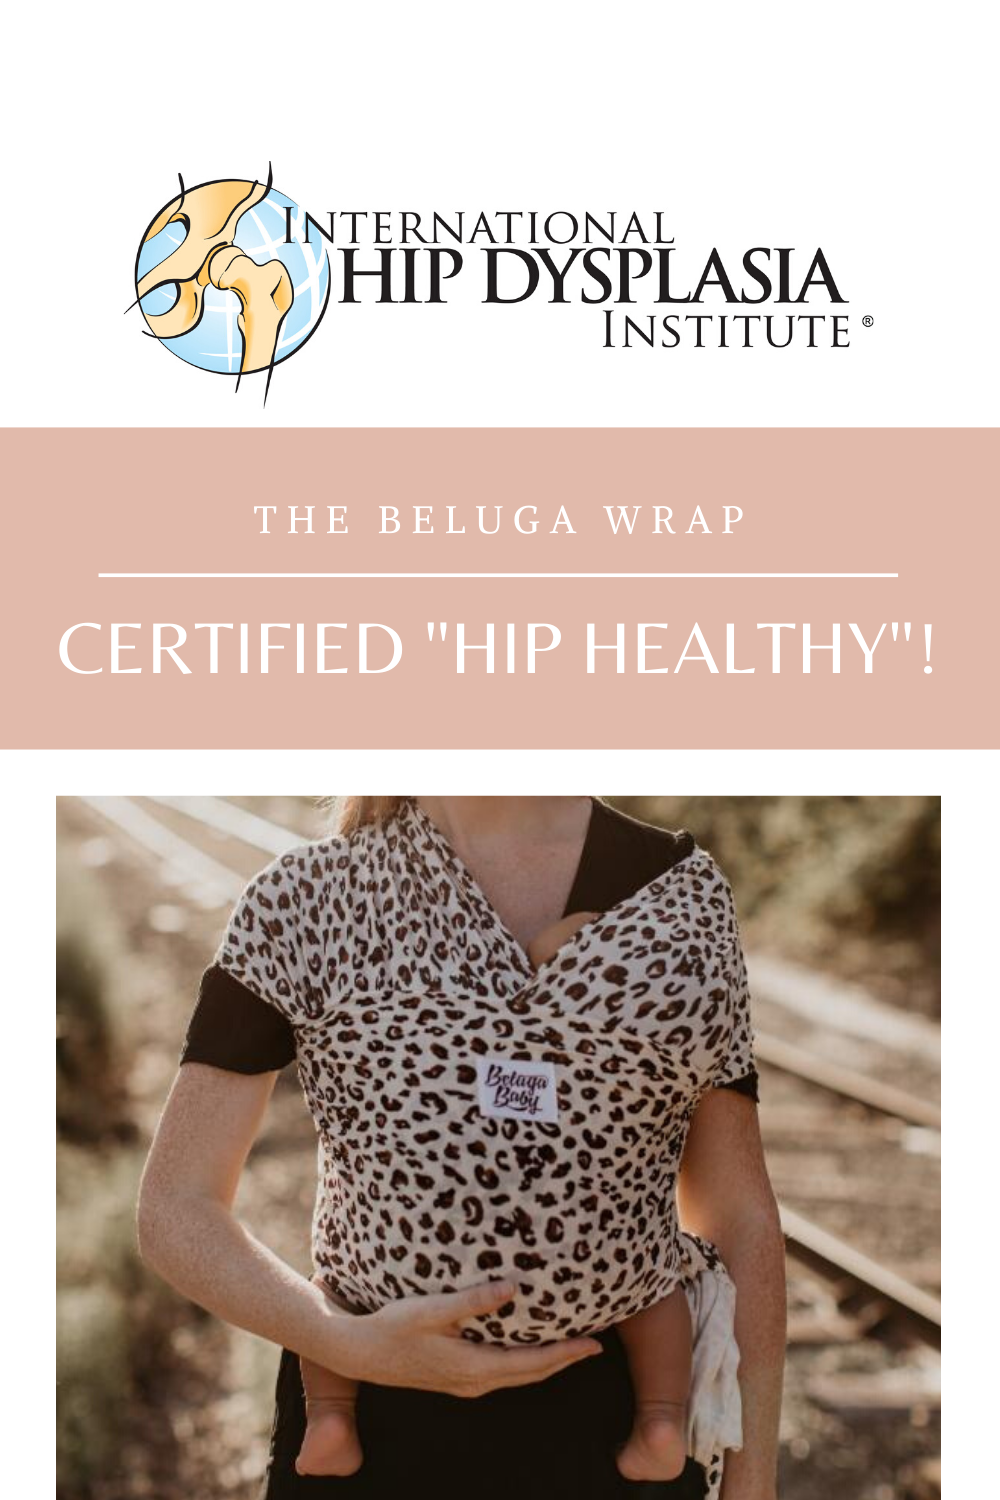 The Beluga Wrap is Certified Hip Healthy!